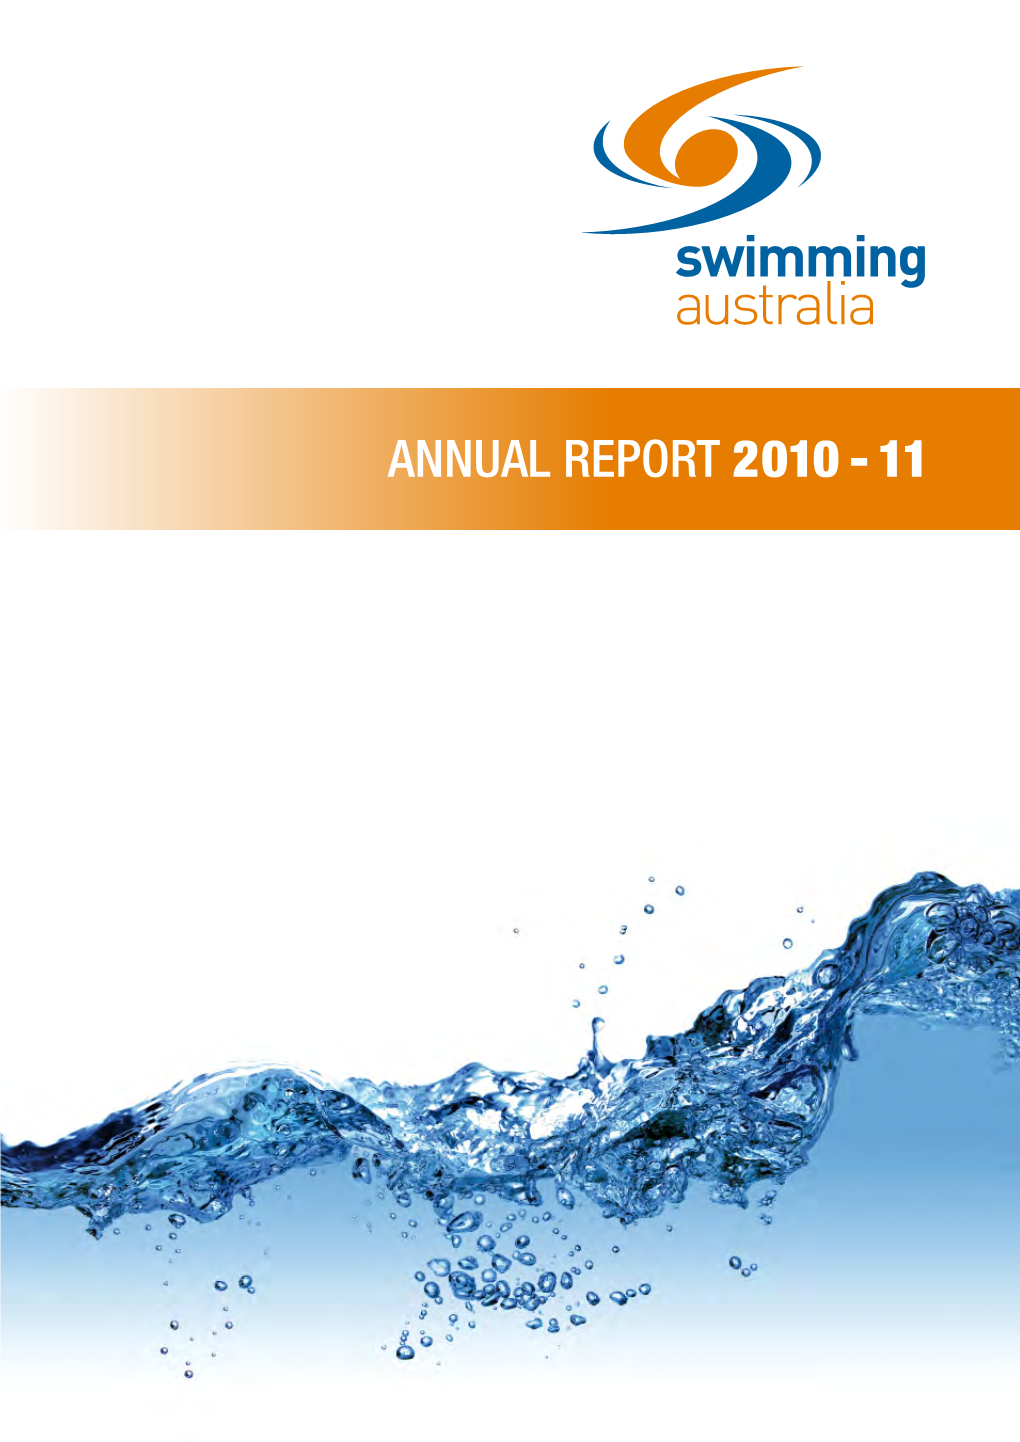 Annual Report 2010 - 11